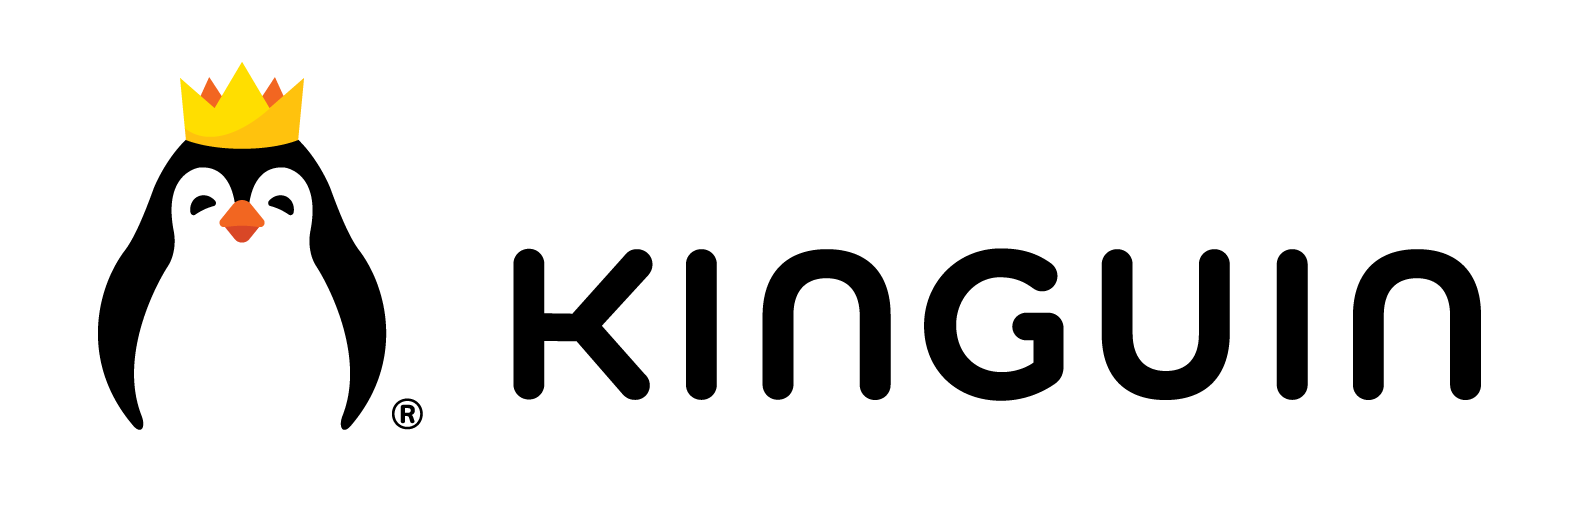 kinguin logo final RGB horizontal